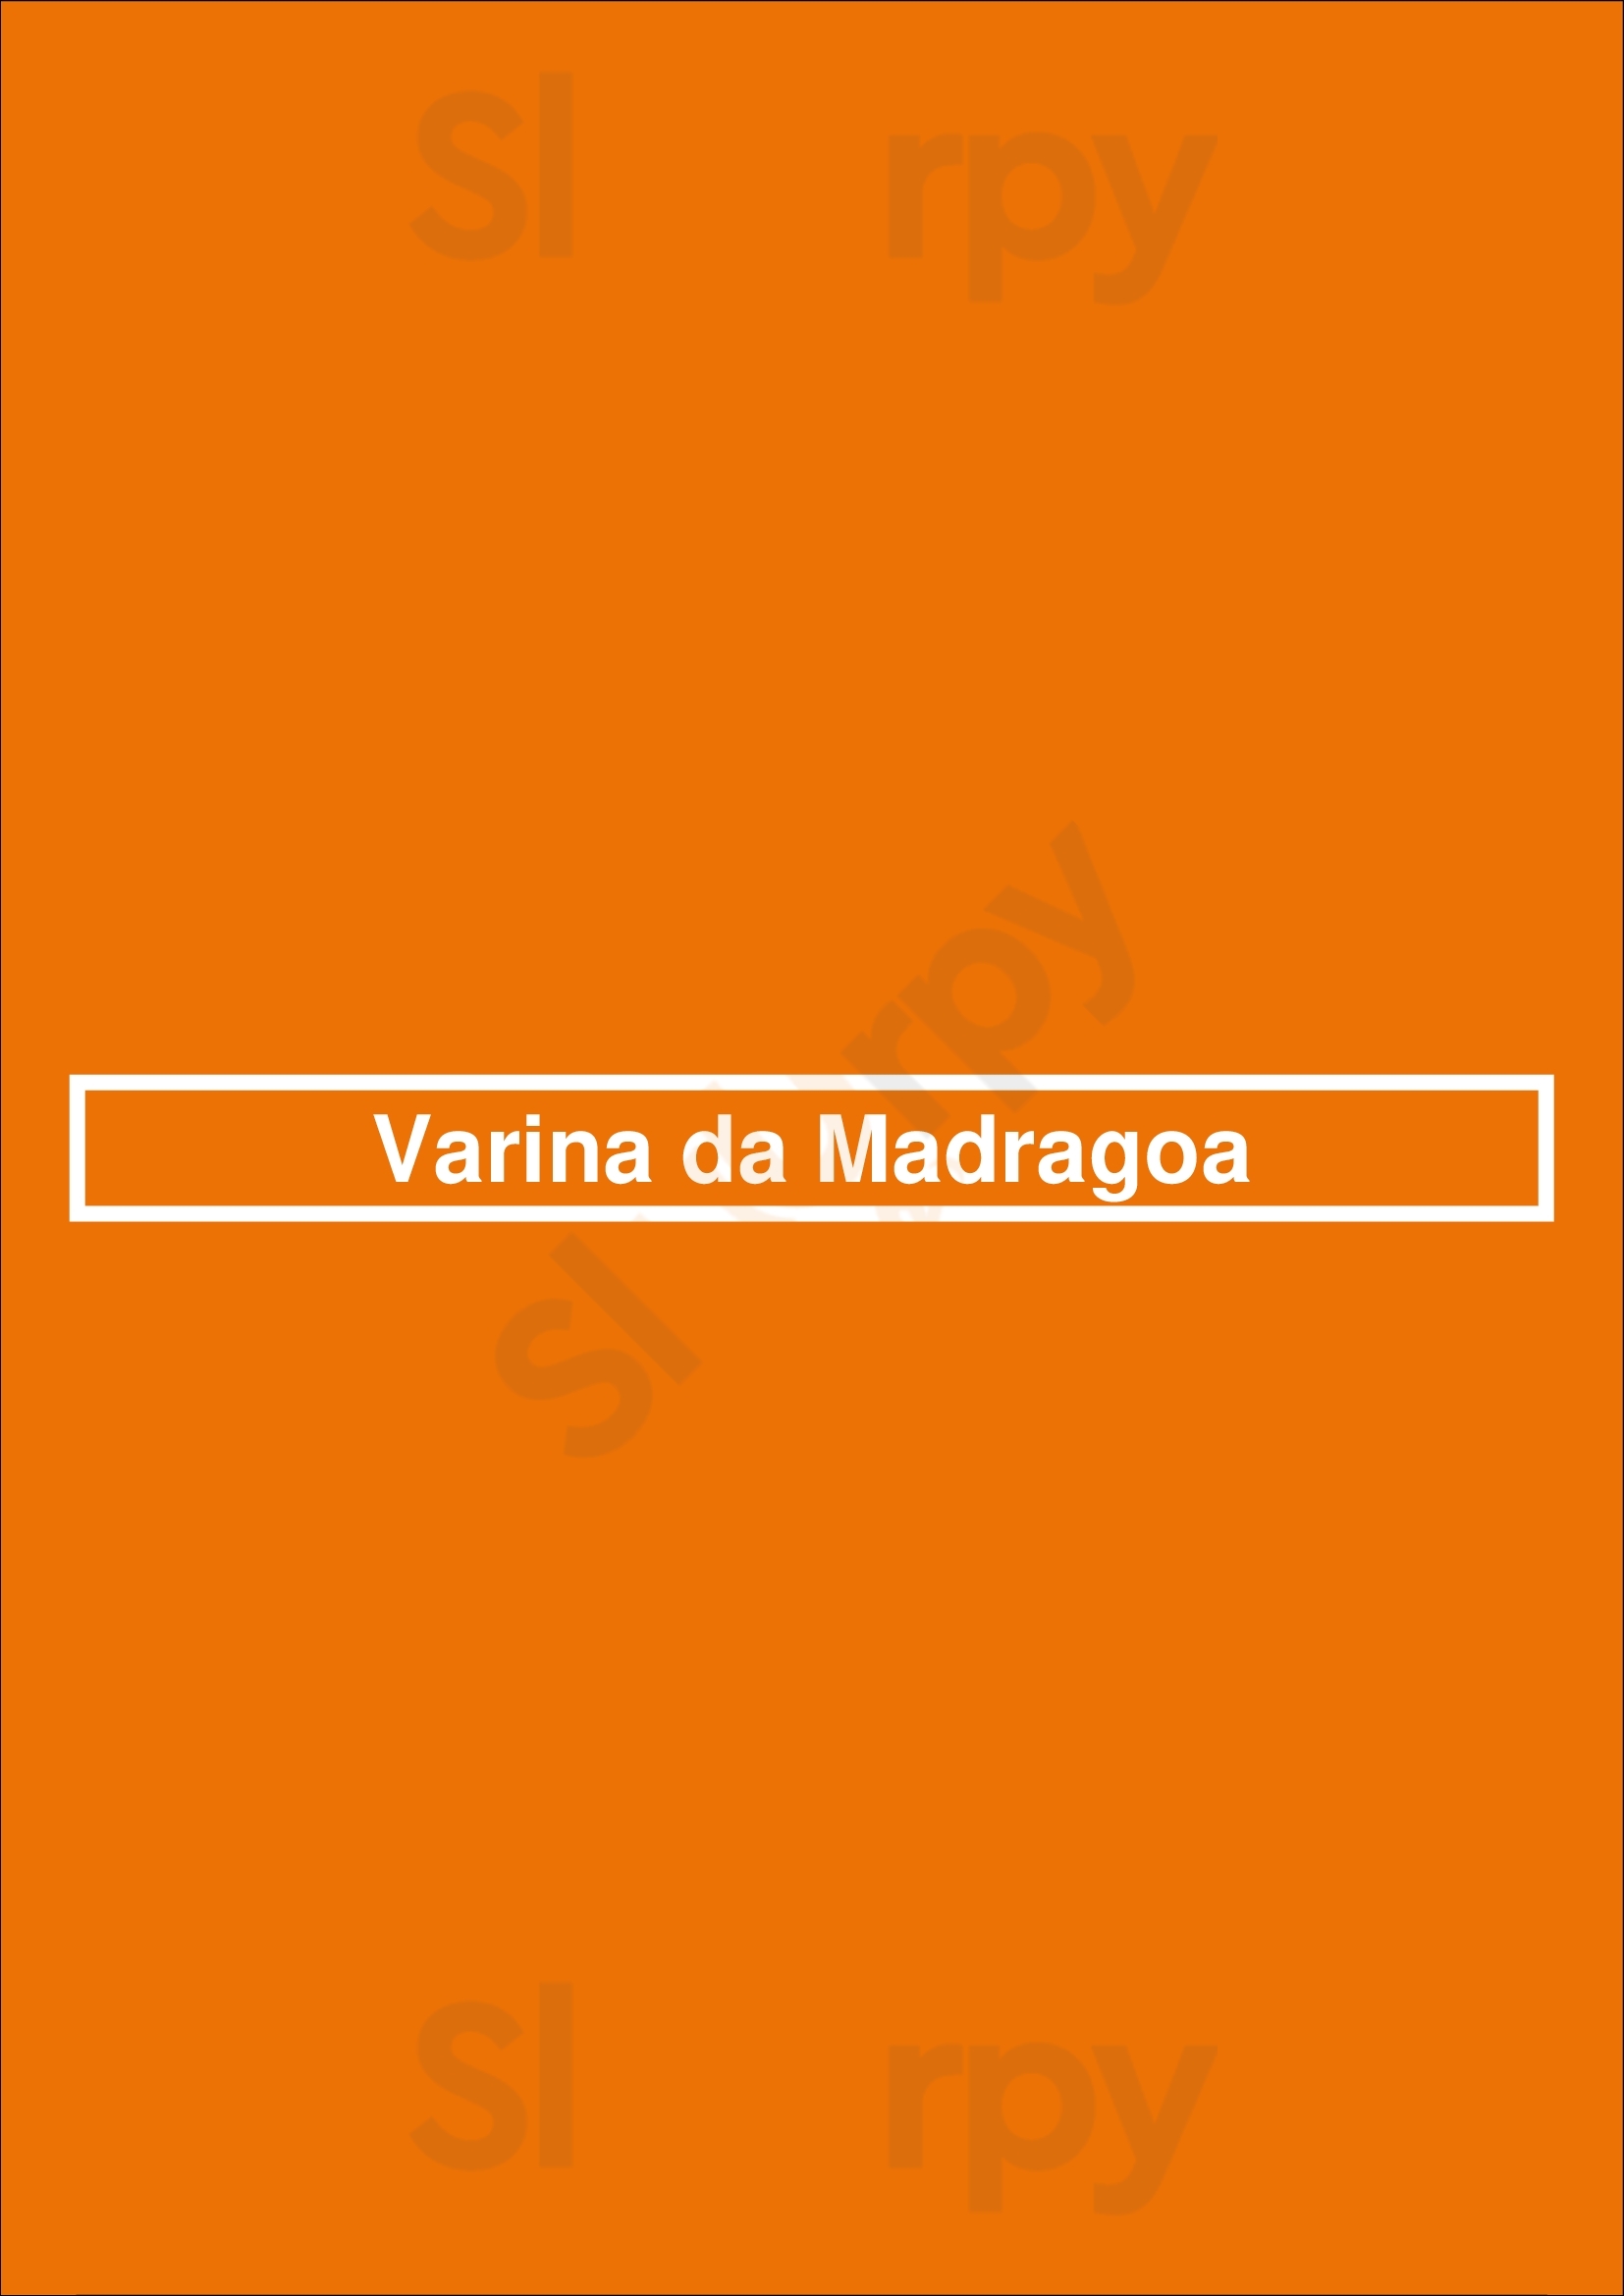 Varina Da Madragoa Lisboa Menu - 1